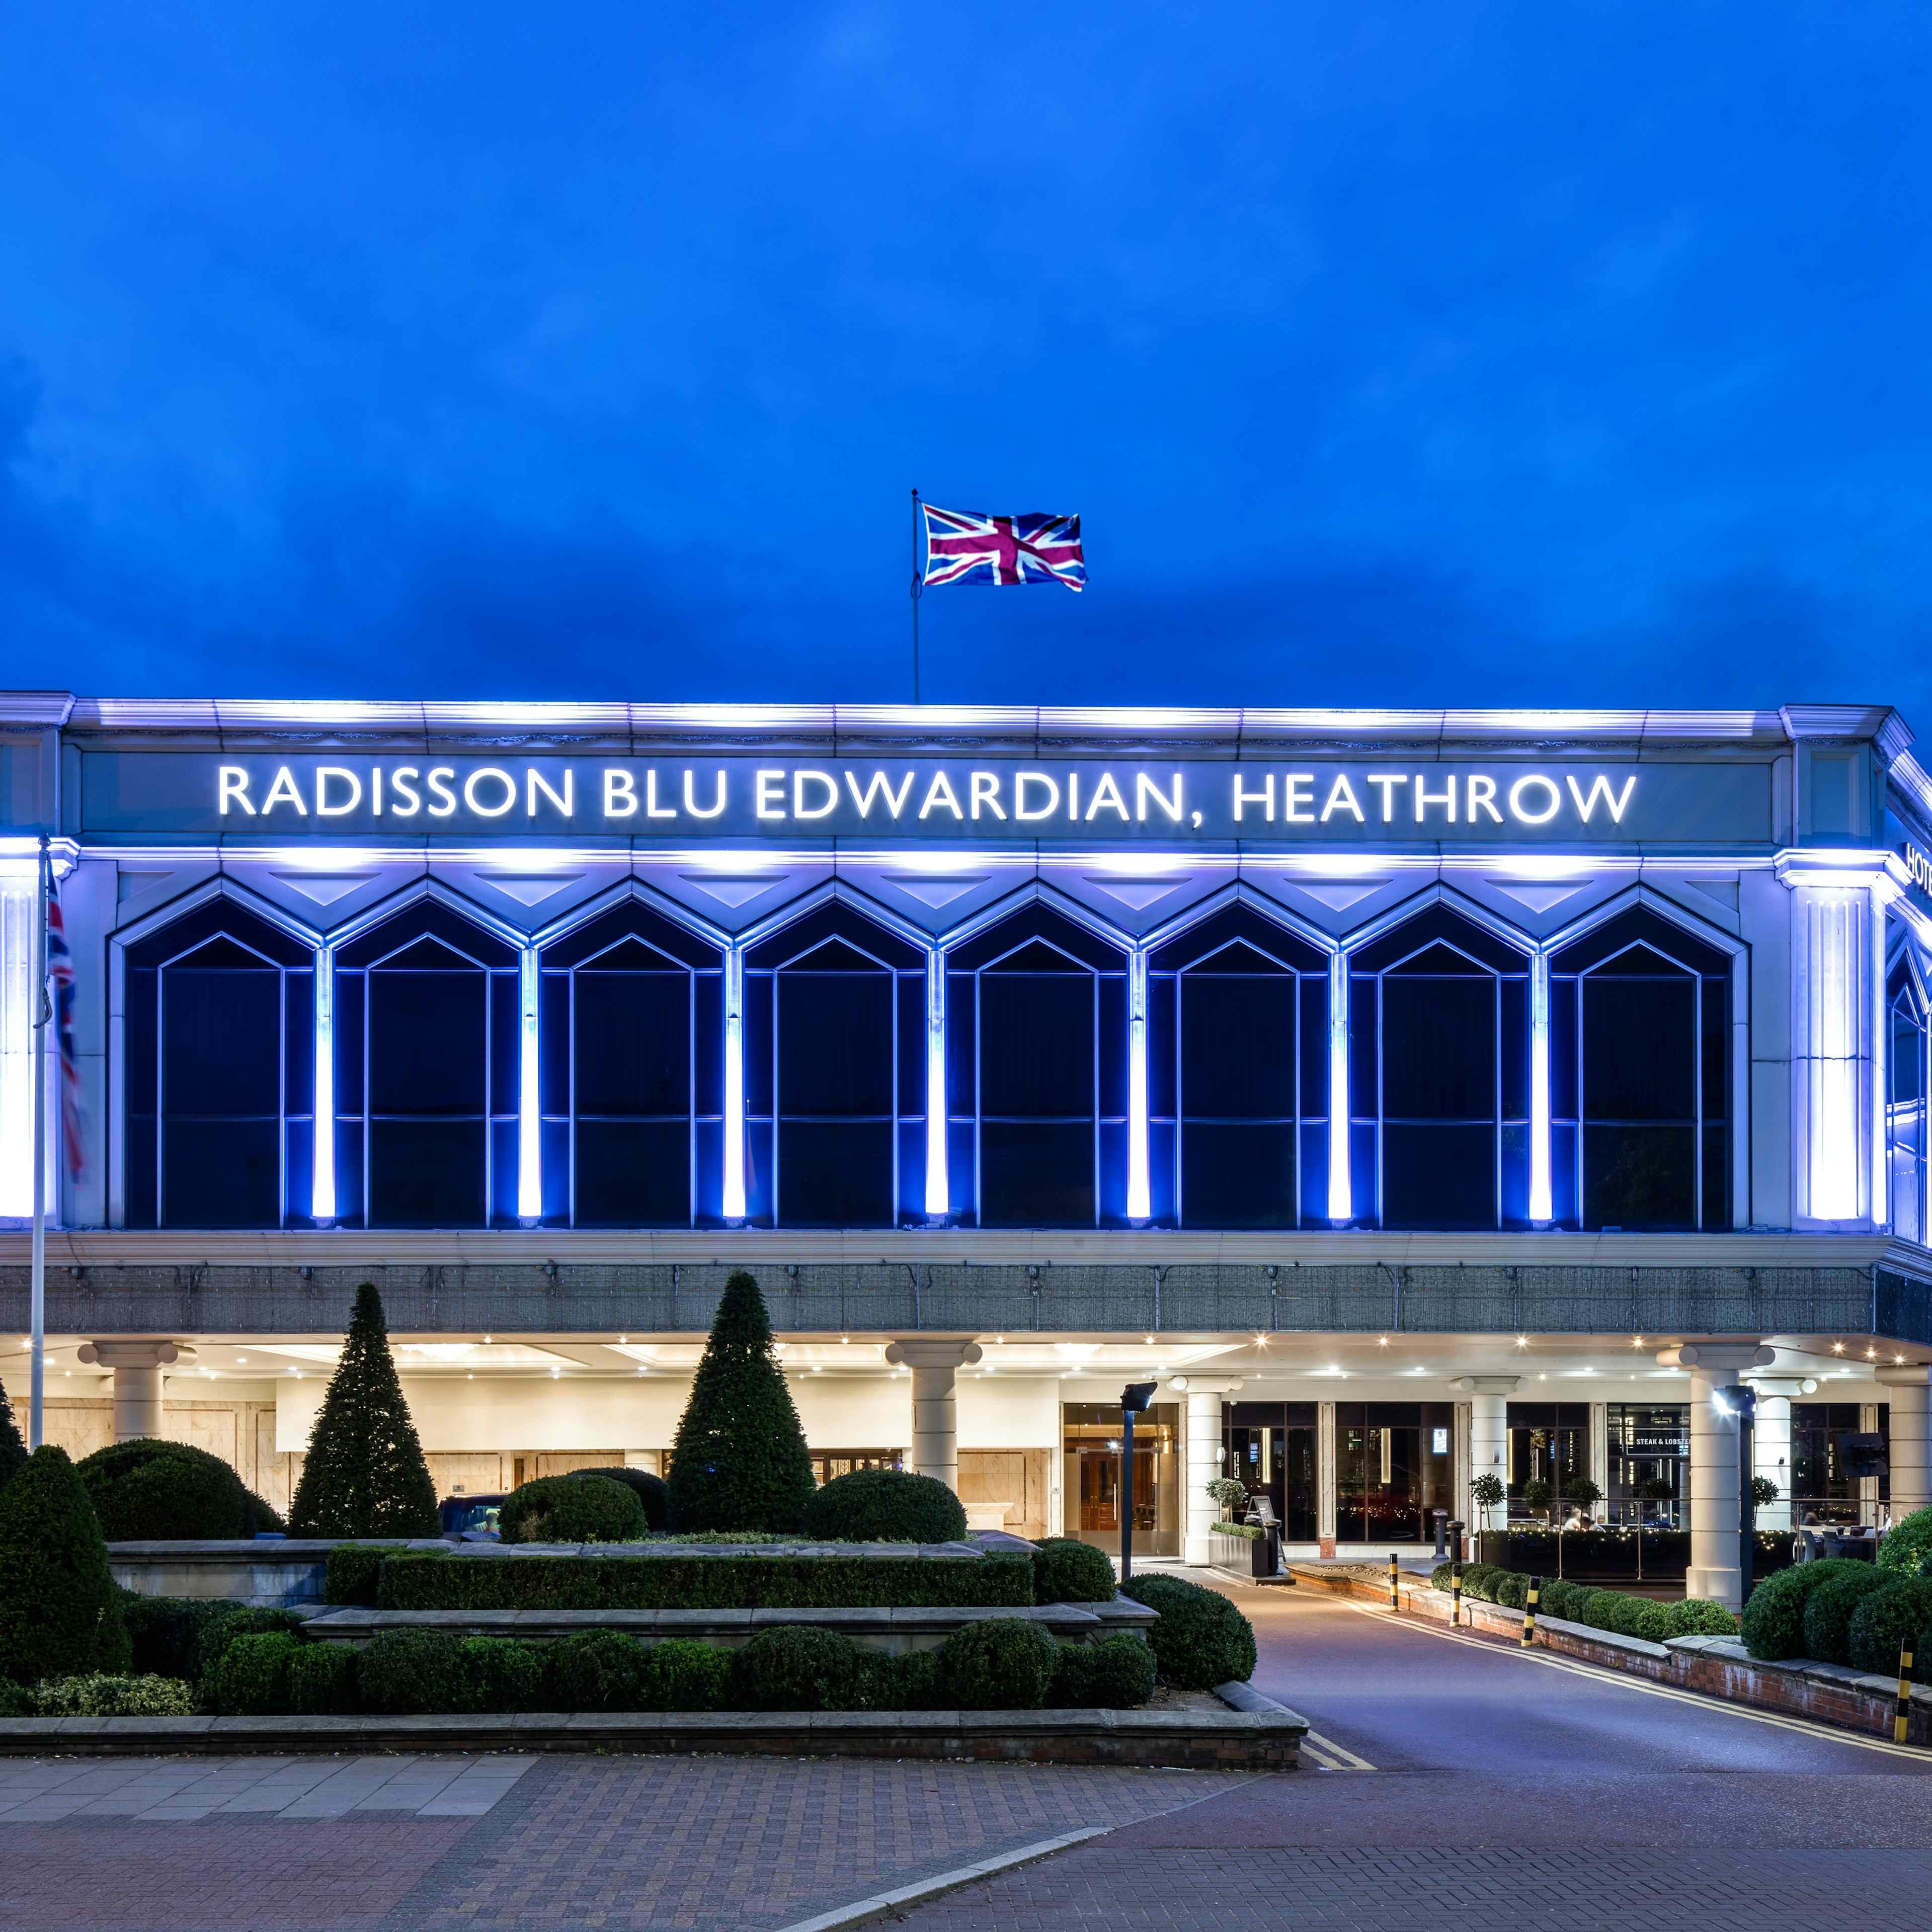 Radisson Blu Edwardian Heathrow - County Suite image 2